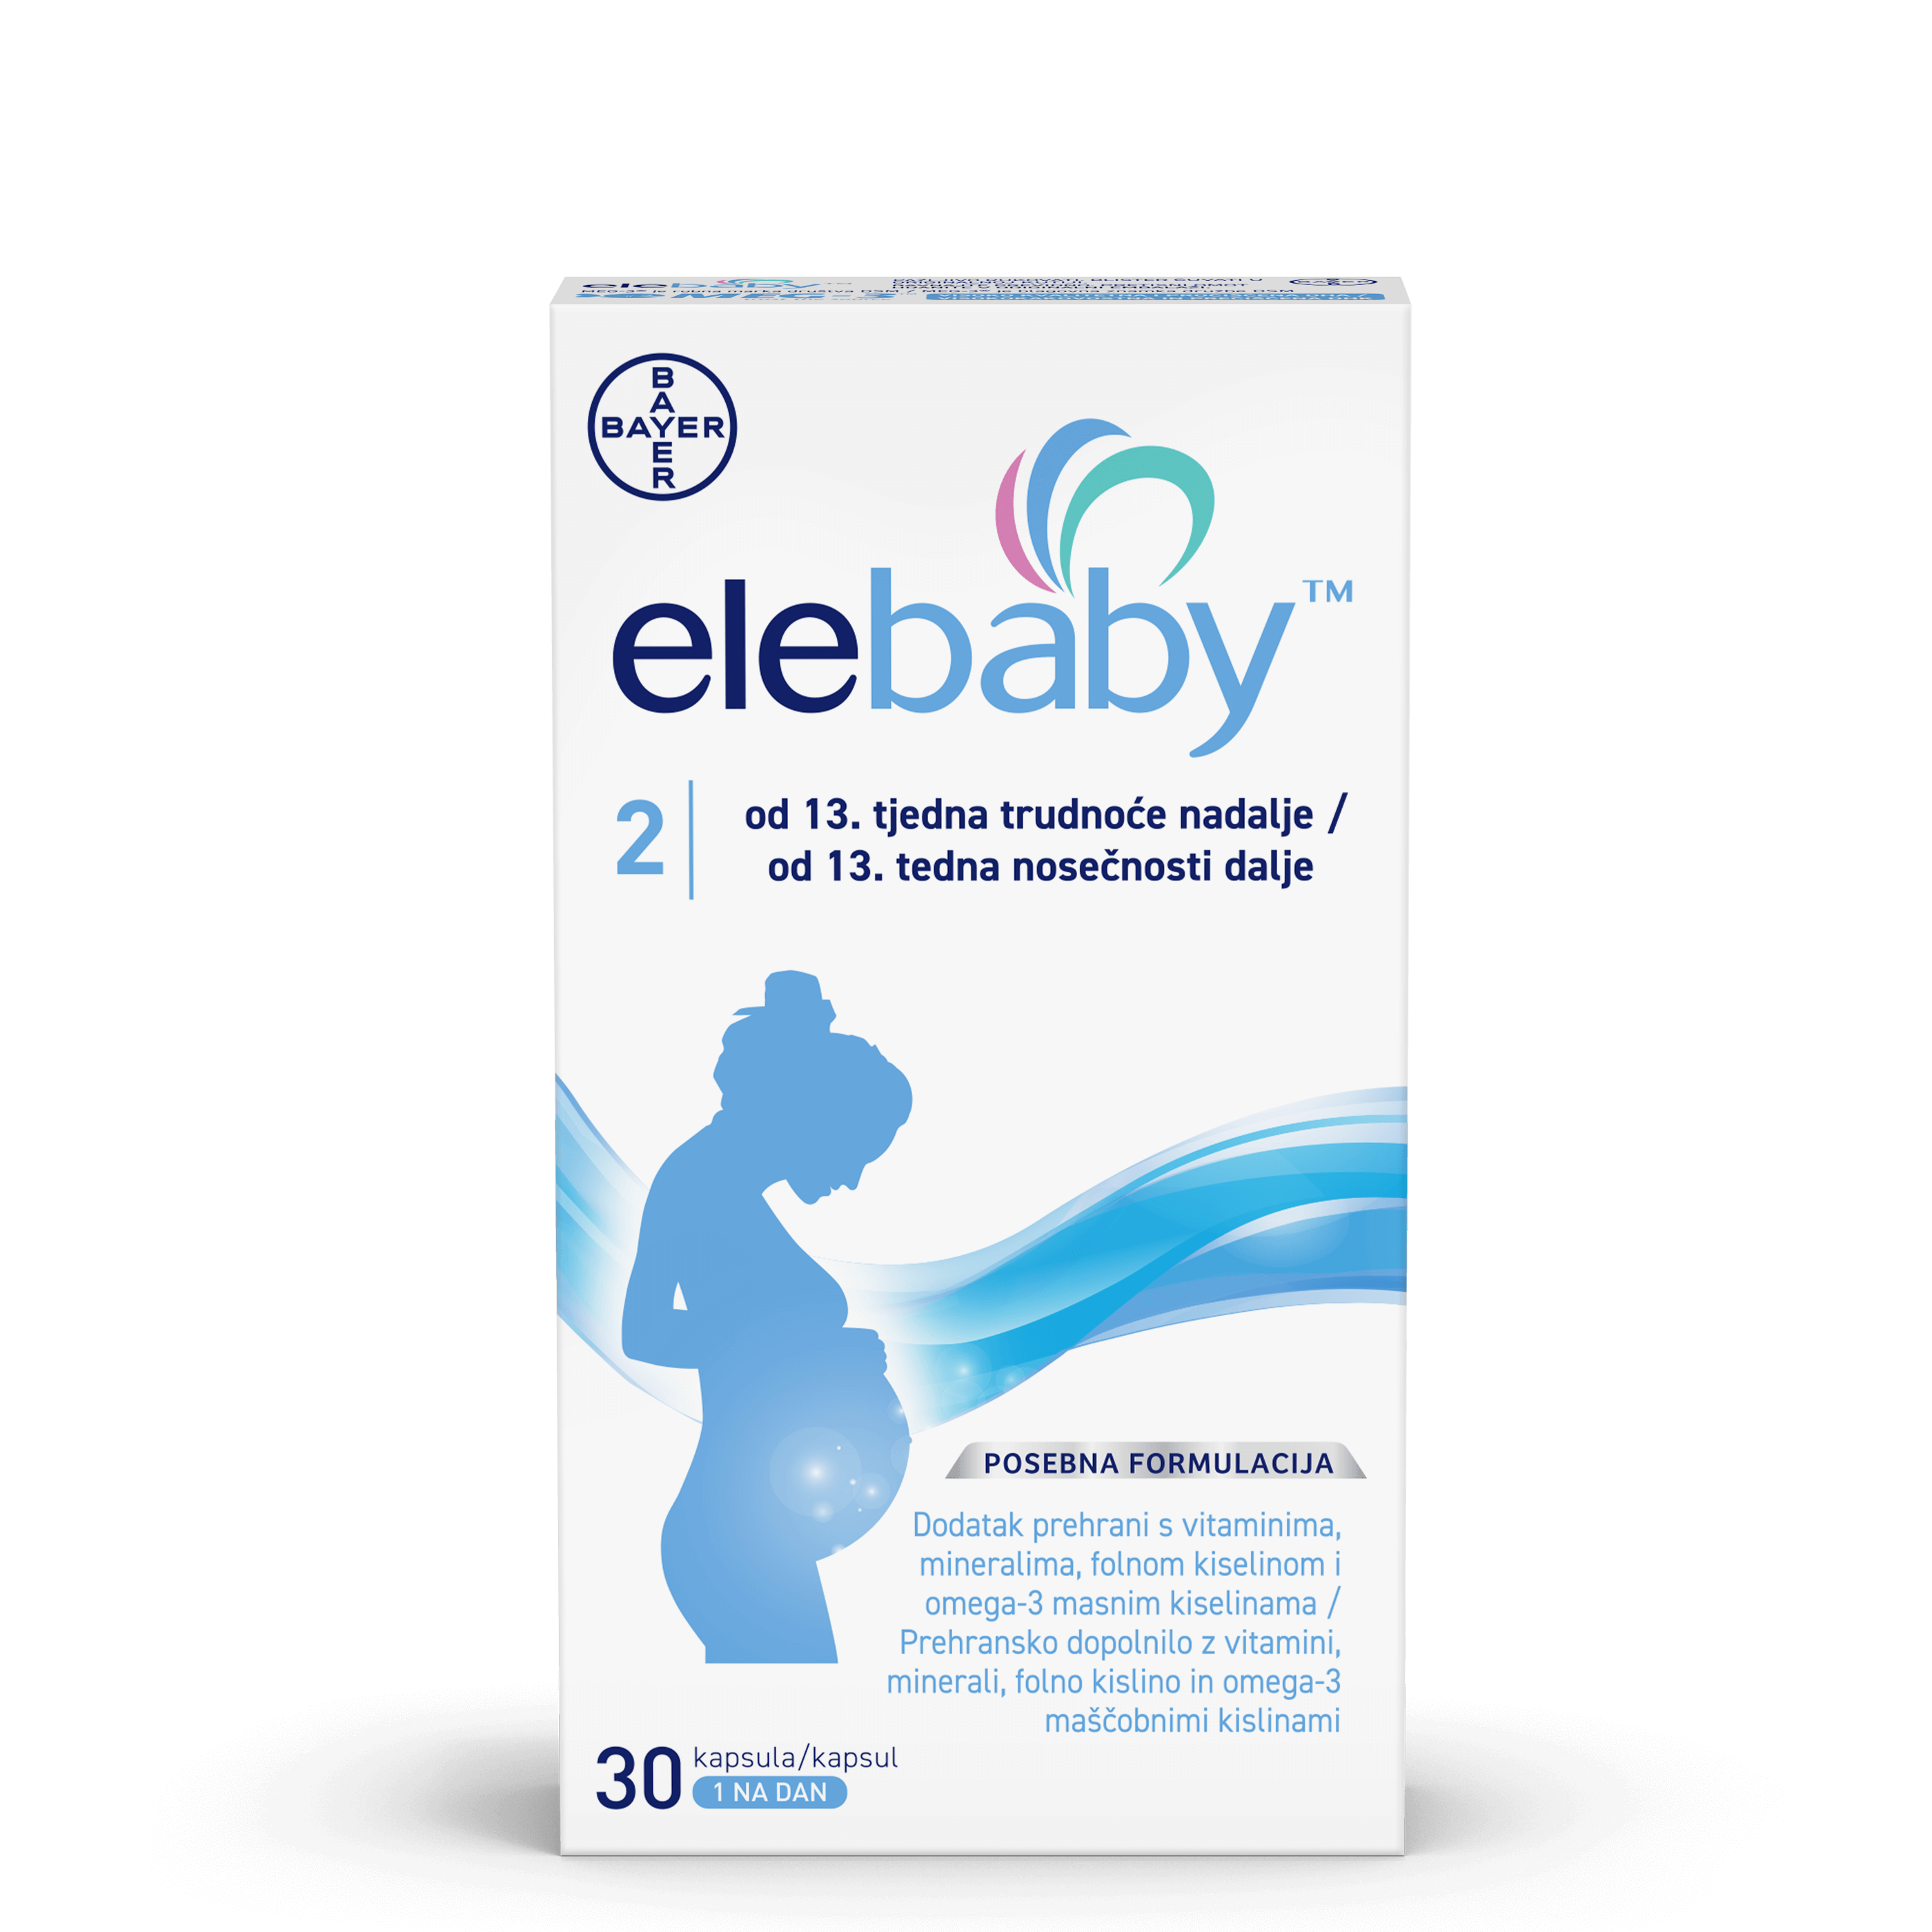 Elebaby_home_slider